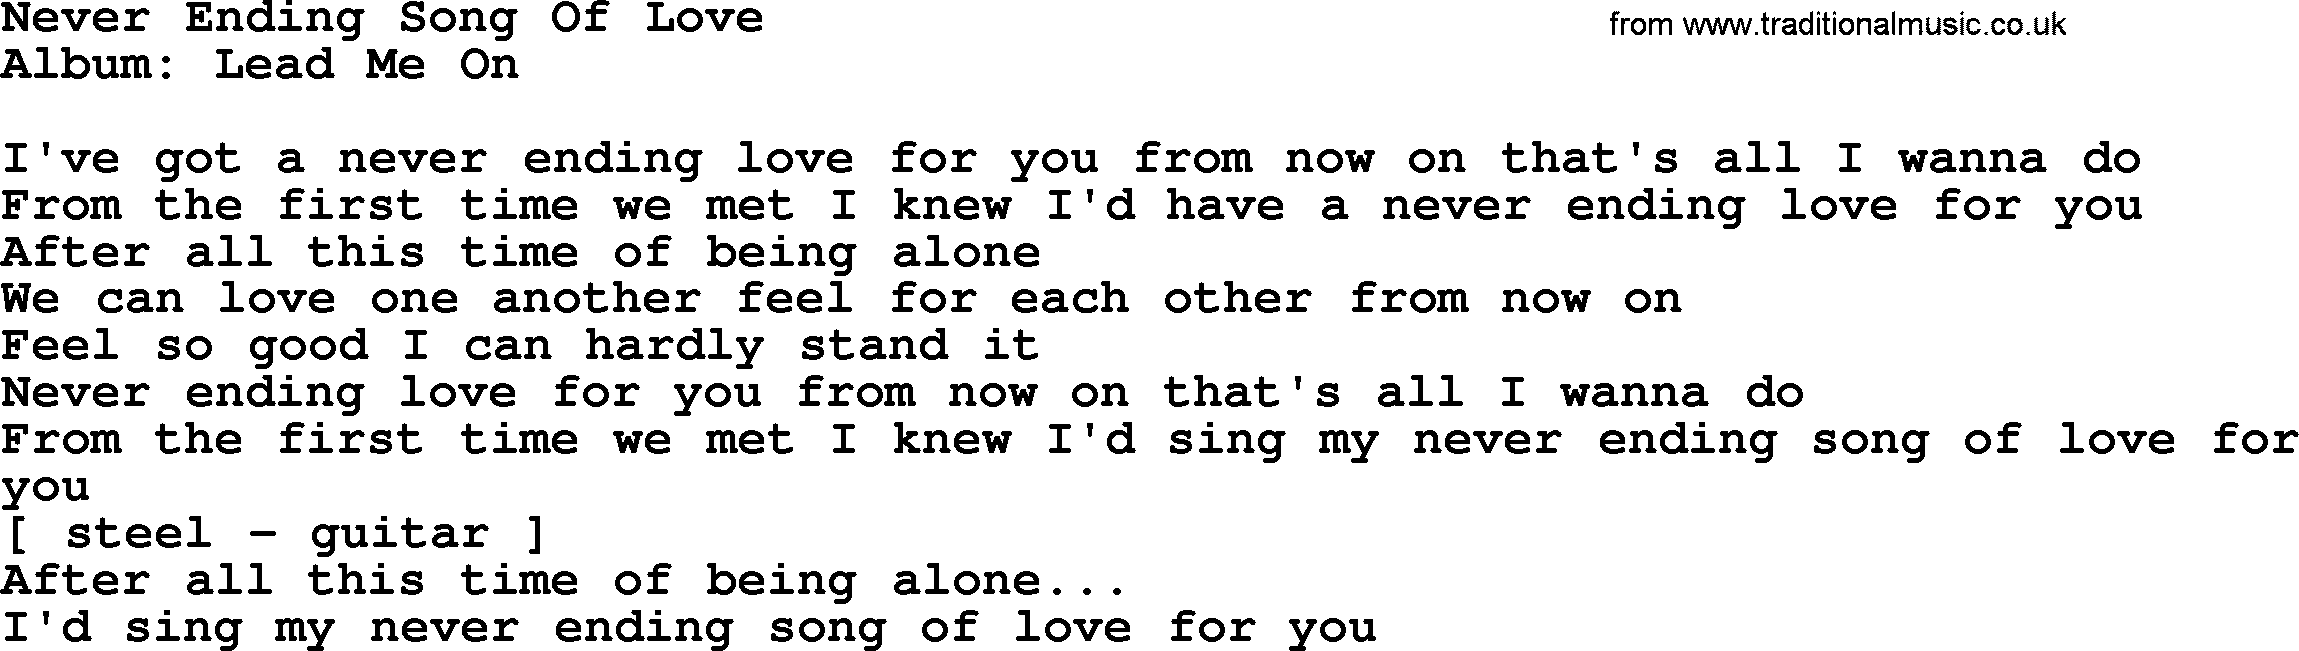 Loretta Lynn song: Never Ending Song Of Love lyrics